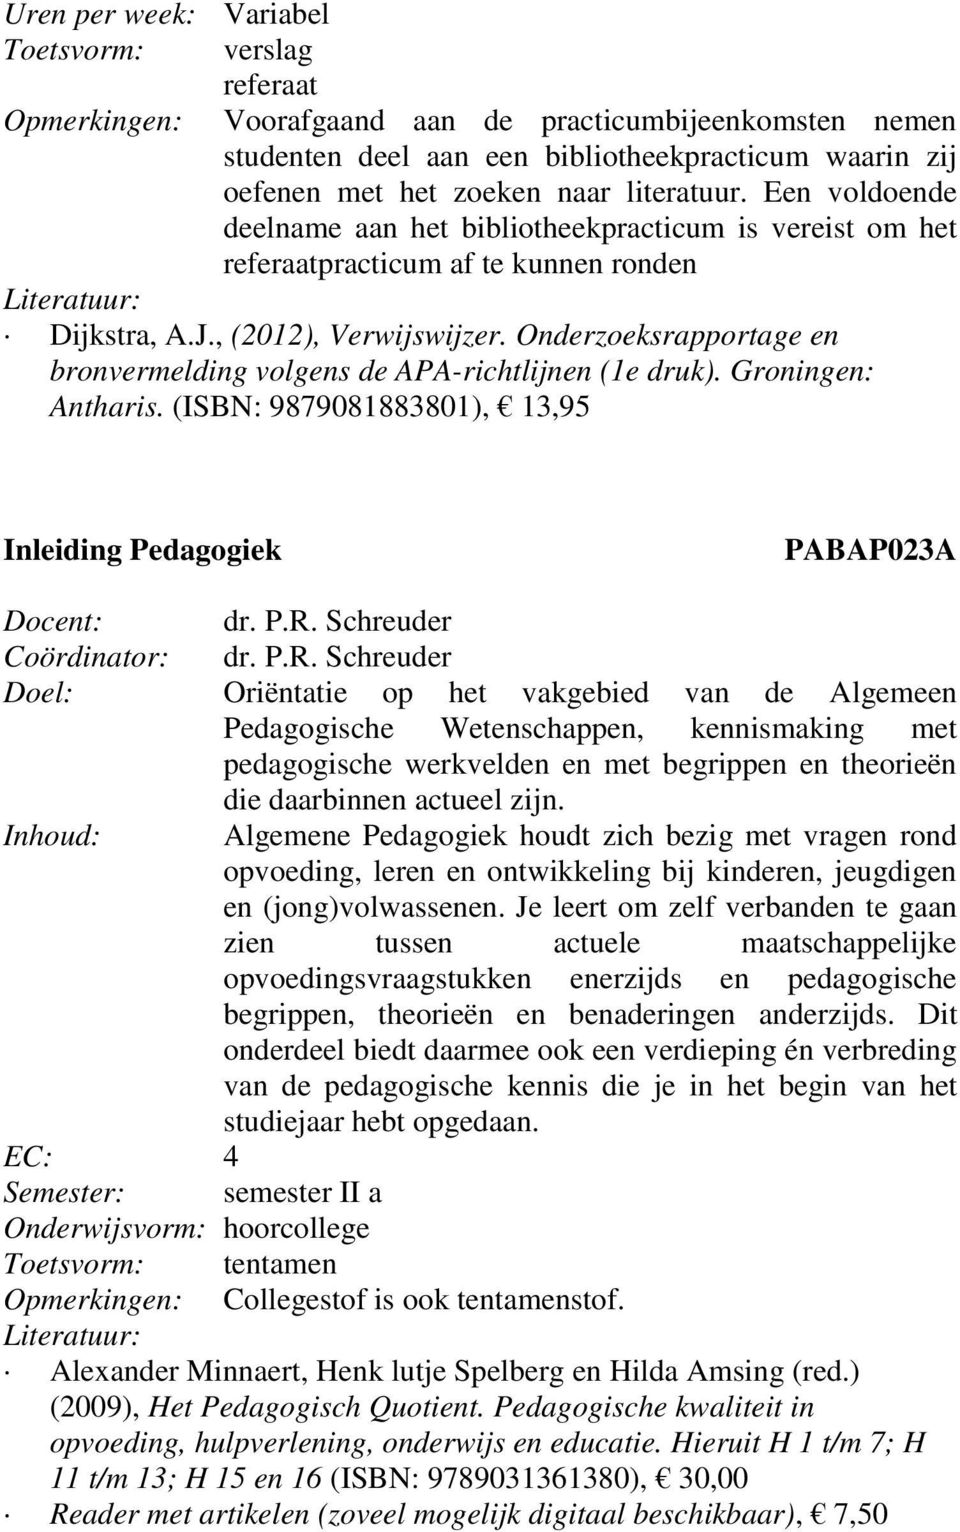 Onderzoeksrapportage en bronvermelding volgens de APA-richtlijnen (1e druk). Groningen: Antharis. (ISBN: 9879081883801), 13,95 Inleiding Pedagogiek PABAP023A Docent: dr. P.R.